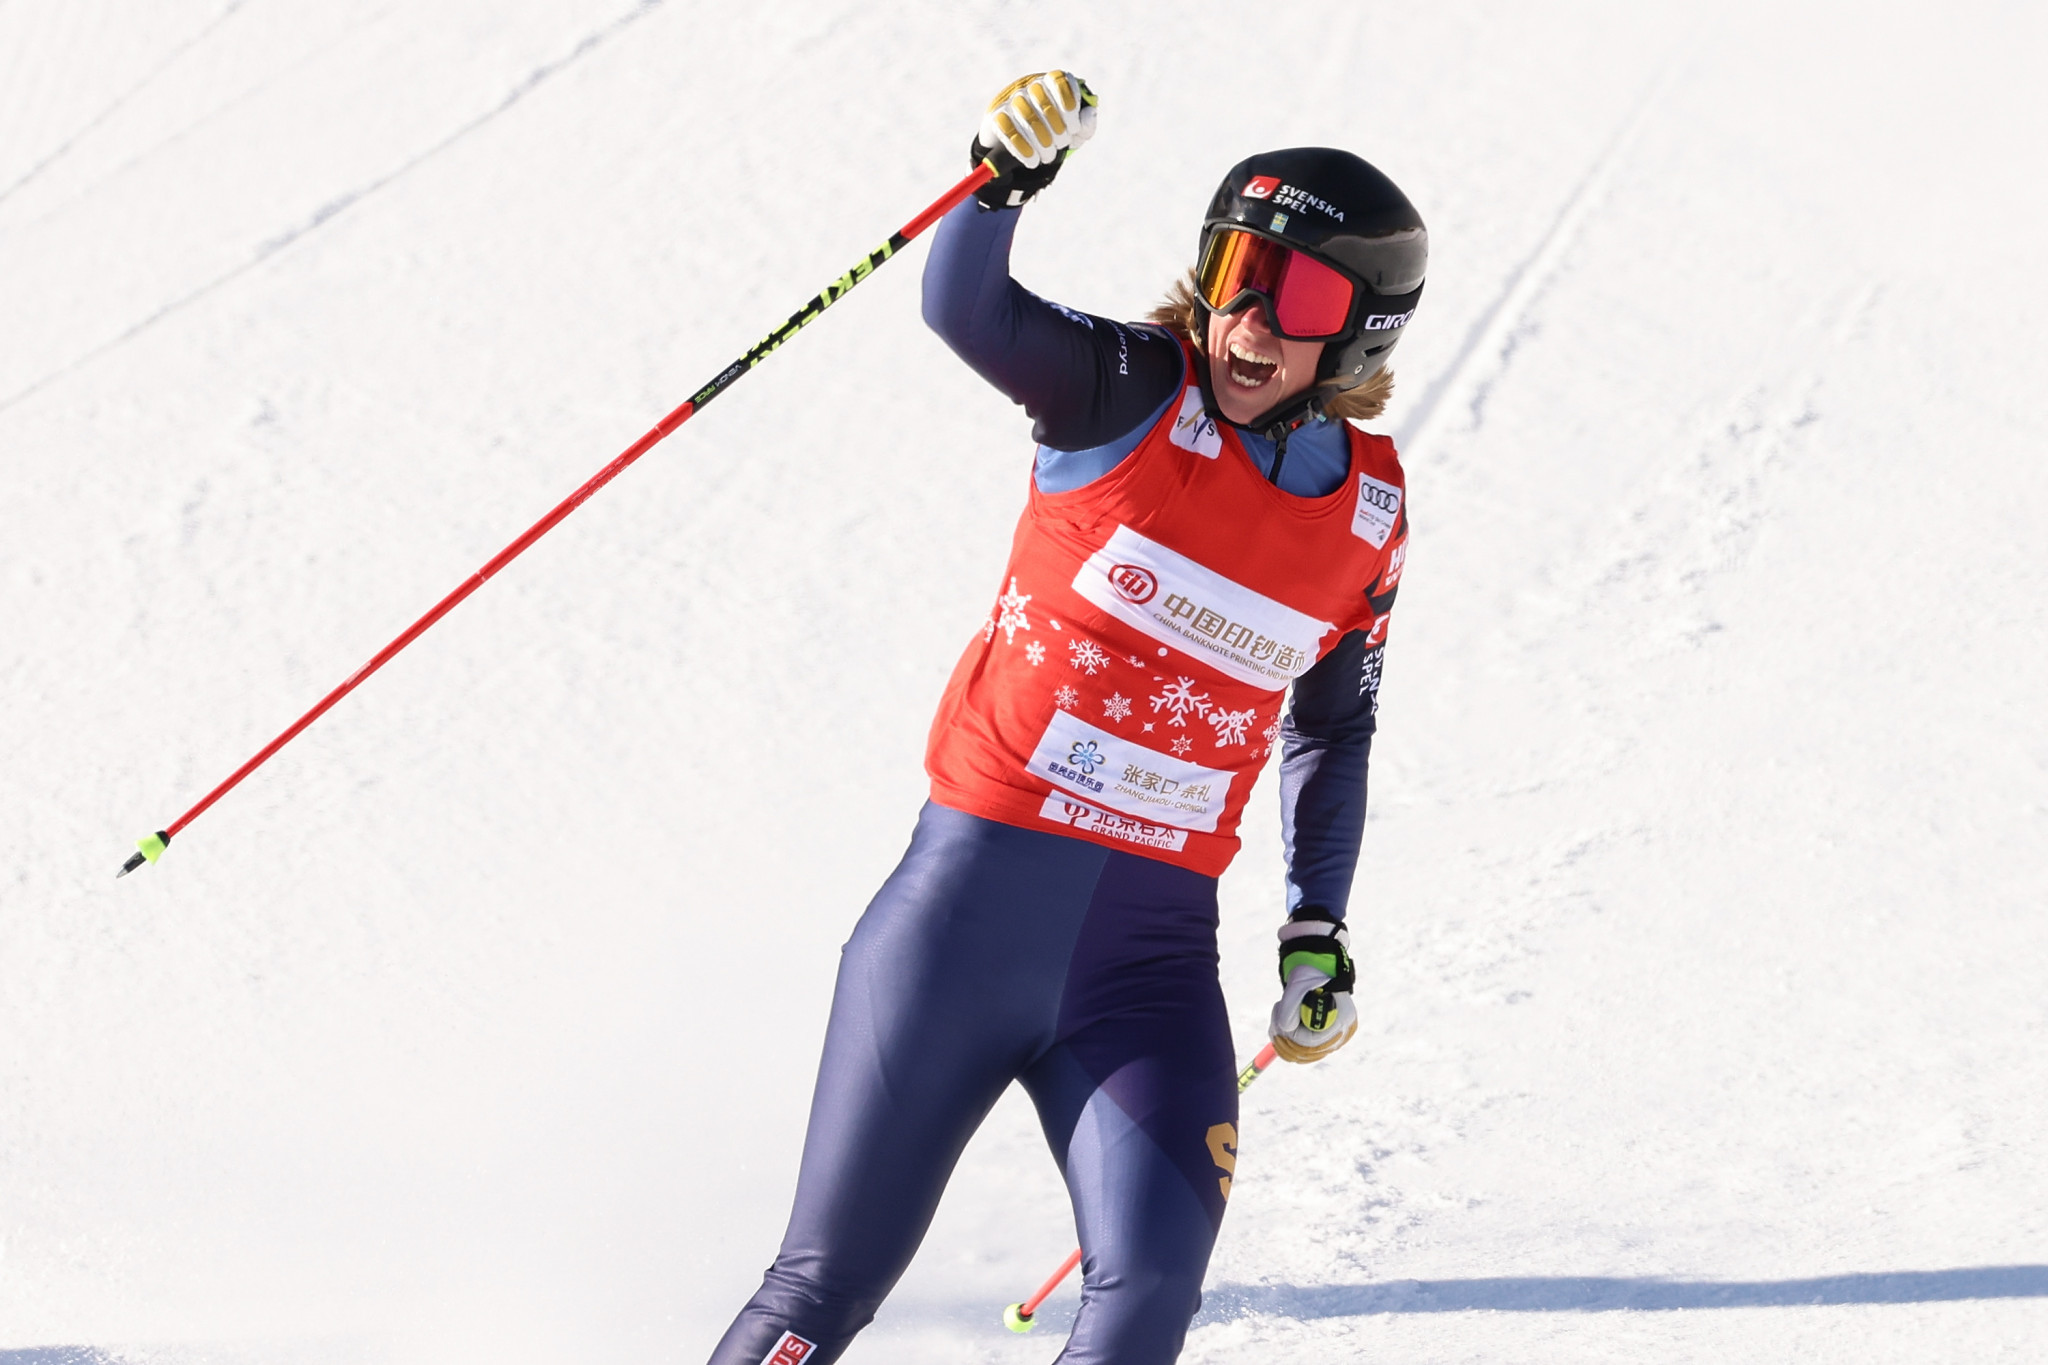 Näslund tops both qualifying runs at Ski Cross World Cup